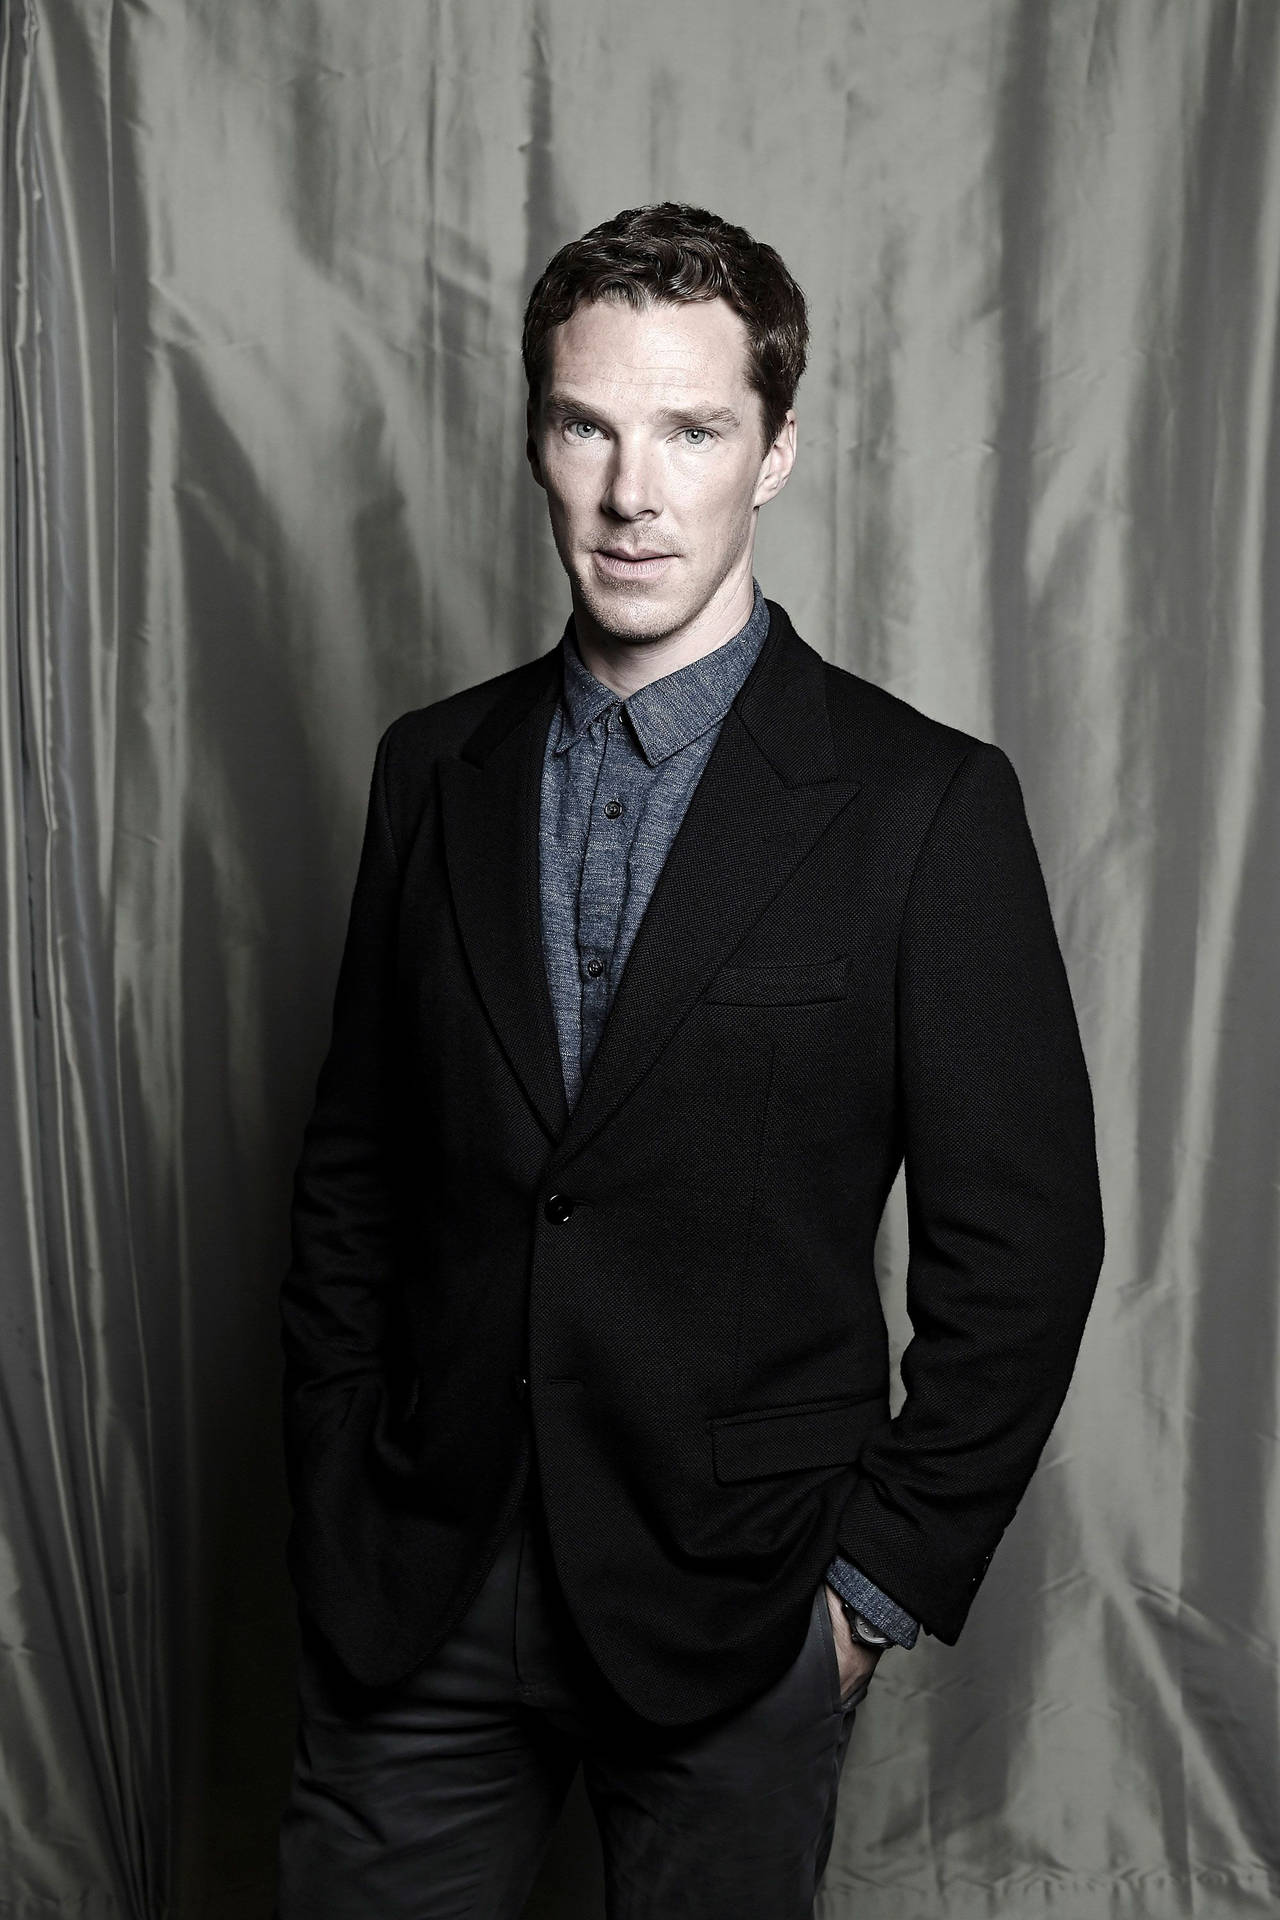 Benedict Cumberbatch Grayscale Image Background